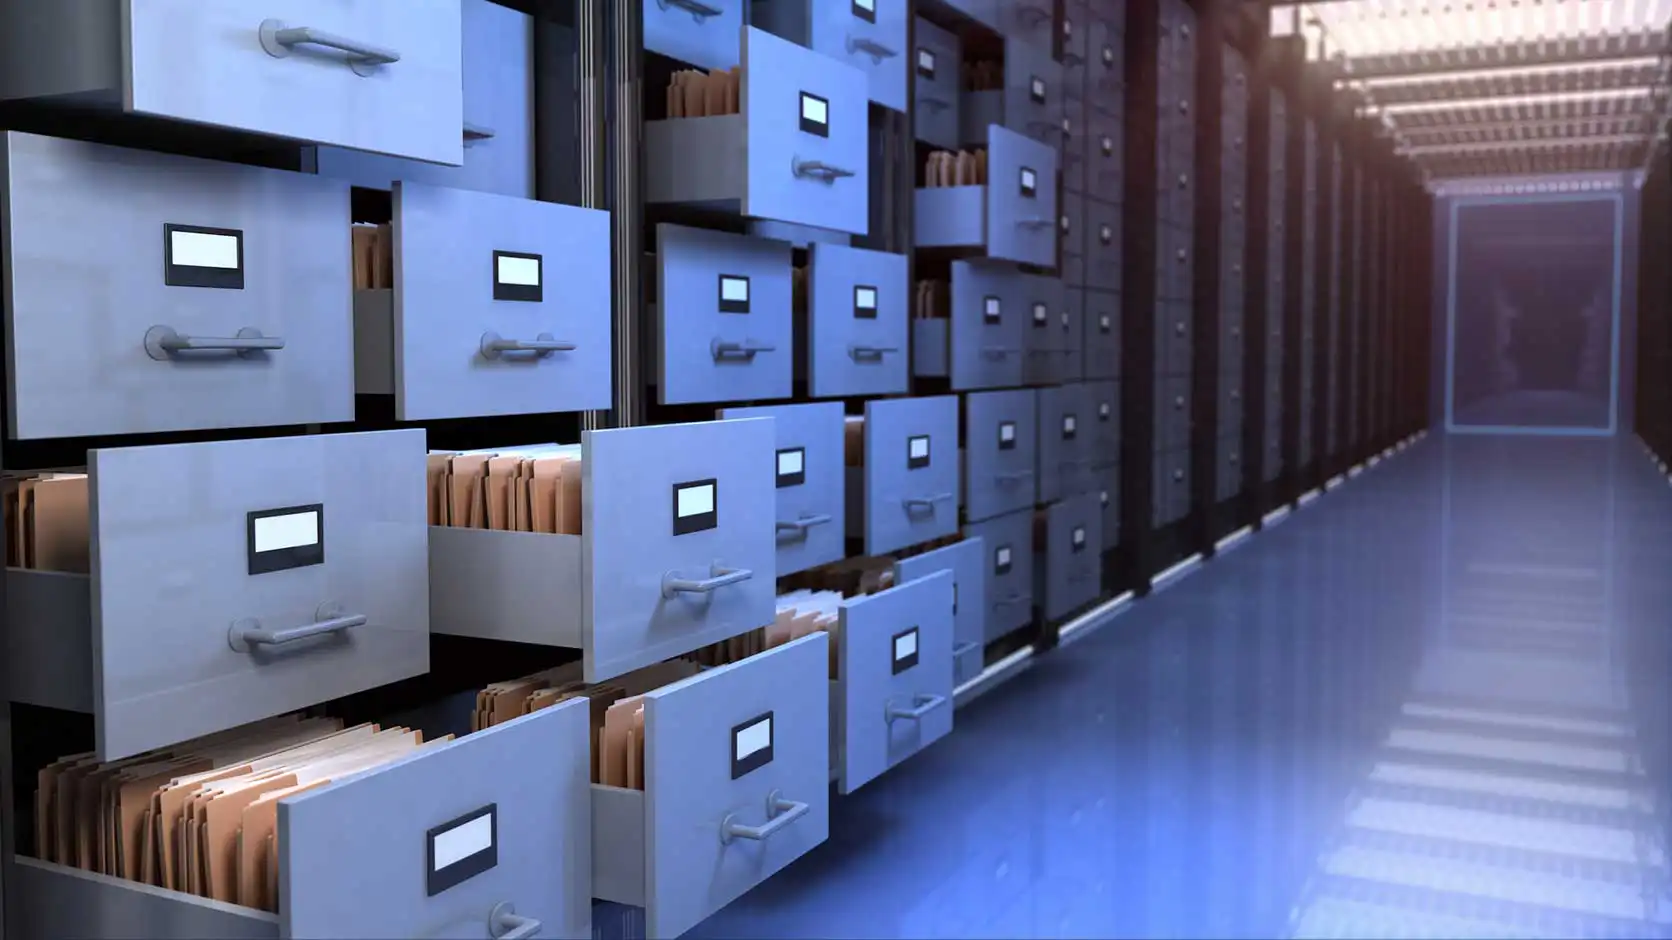 Naseej Archive Management Solution